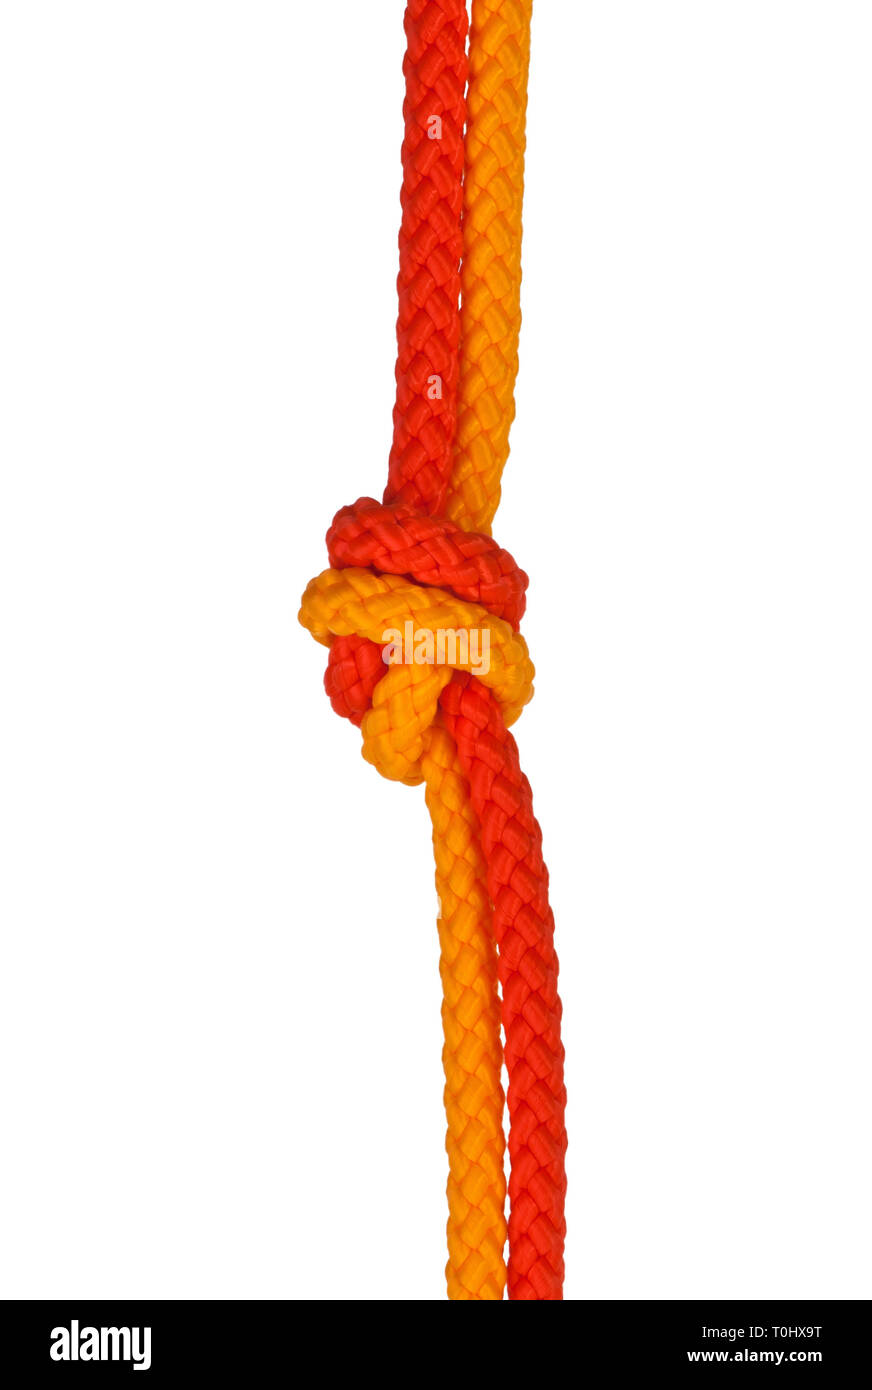 Orange Colored Rope with a White Background Stock Image - Image of orange,  rope: 178567957